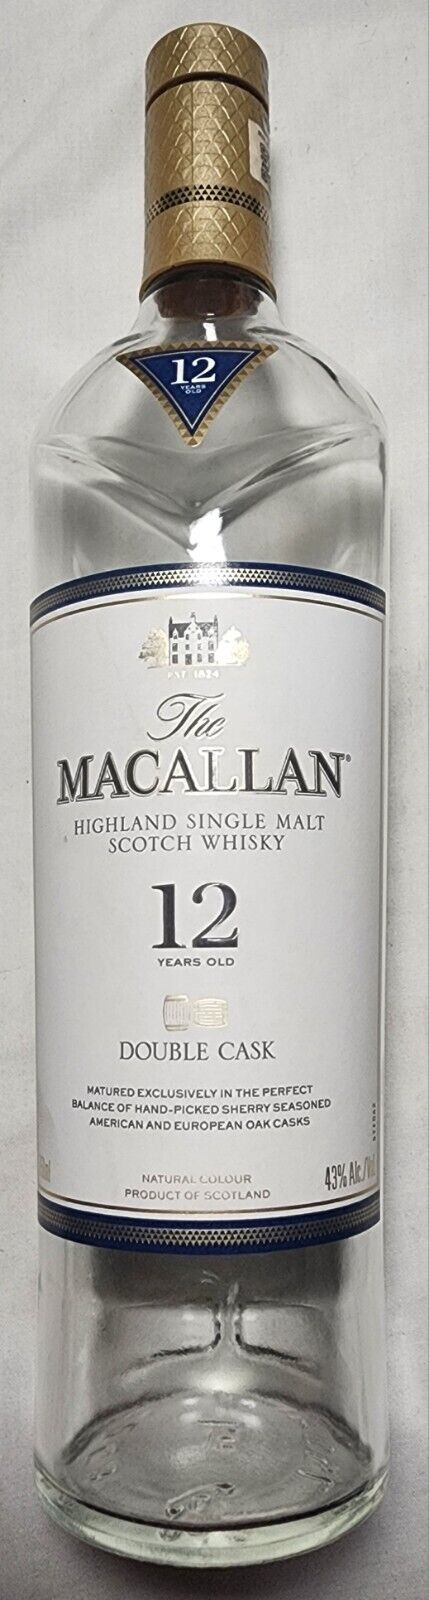 Macallan 12 Double Cask Highland Single Malt Scotch Whisky bottle EMPTY